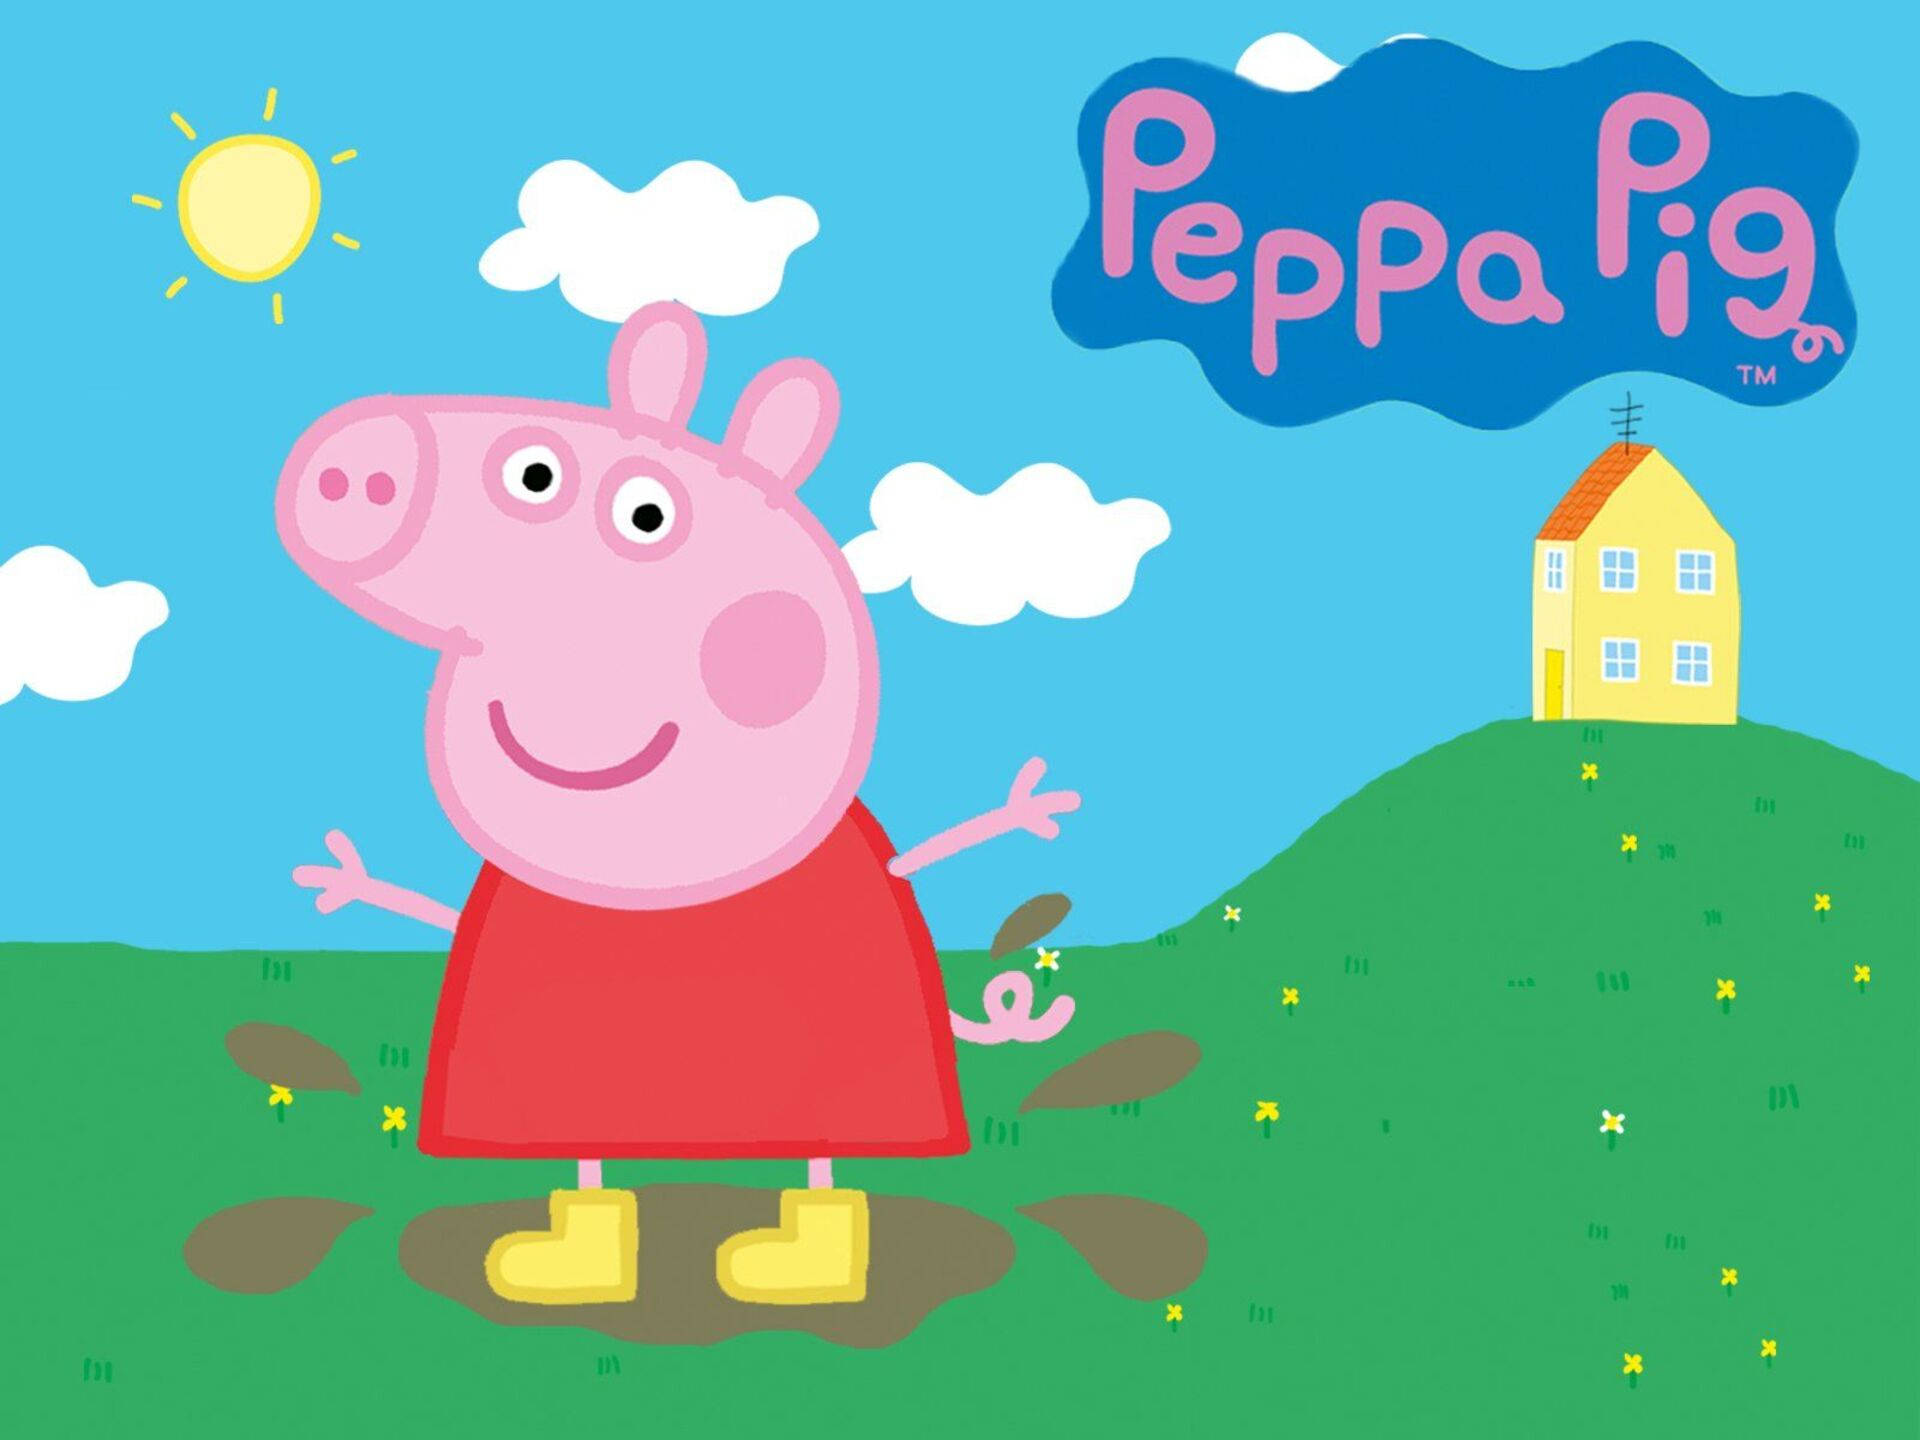 peppa pig - Google Search  Casa de peppa pig, Casa de peppa, Peppa pig  imagenes